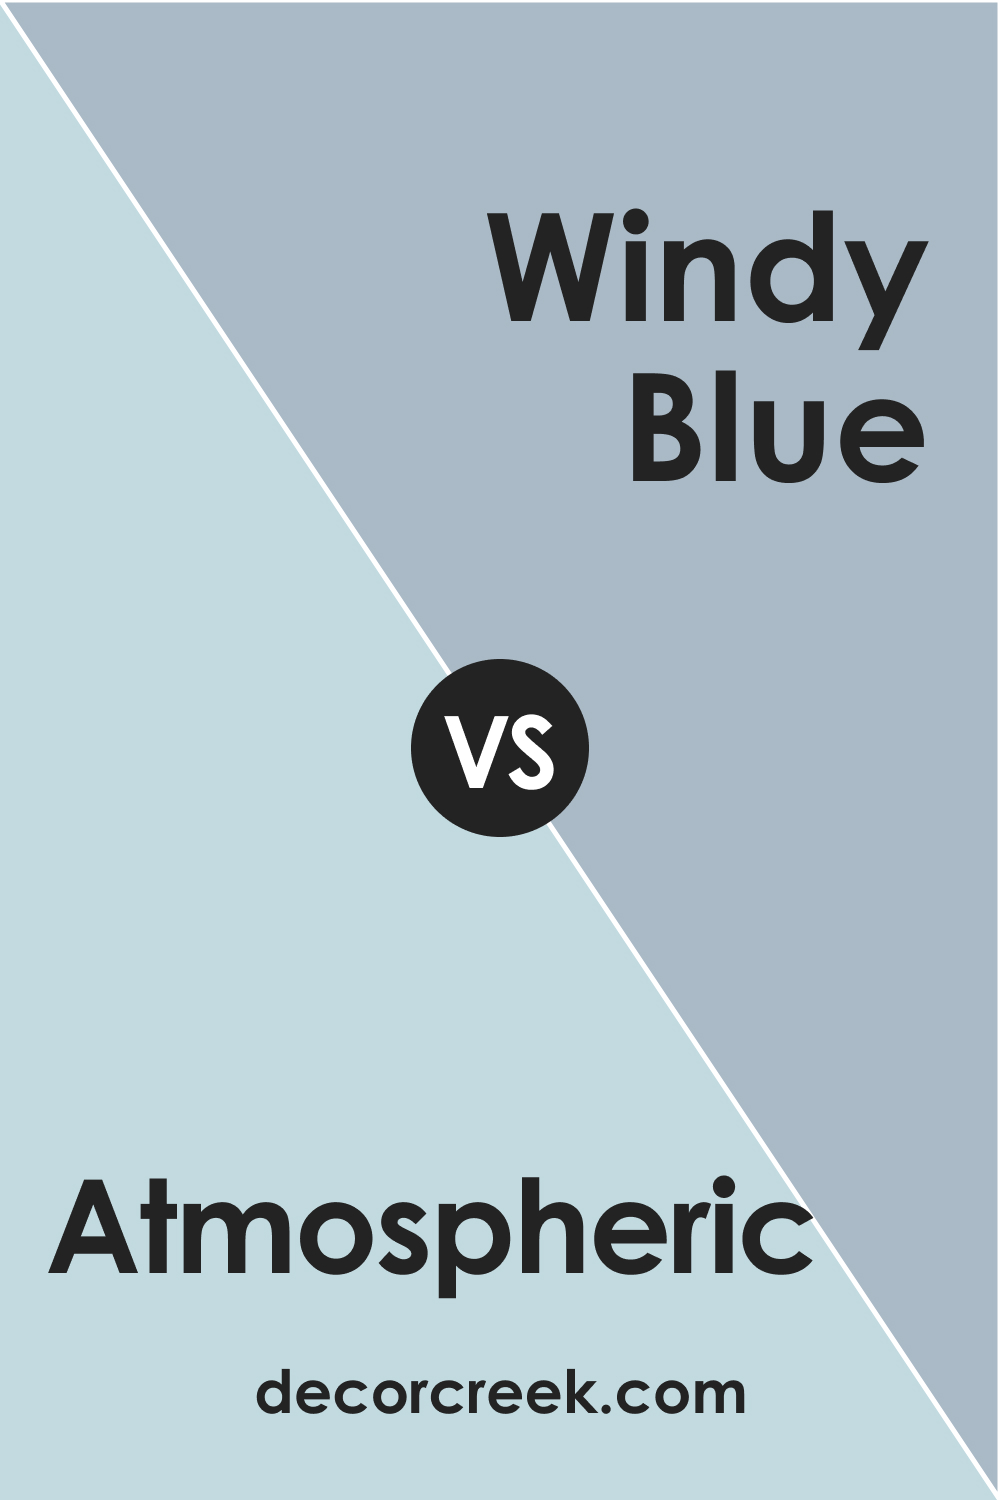 Atmospheric vs Windy Blue